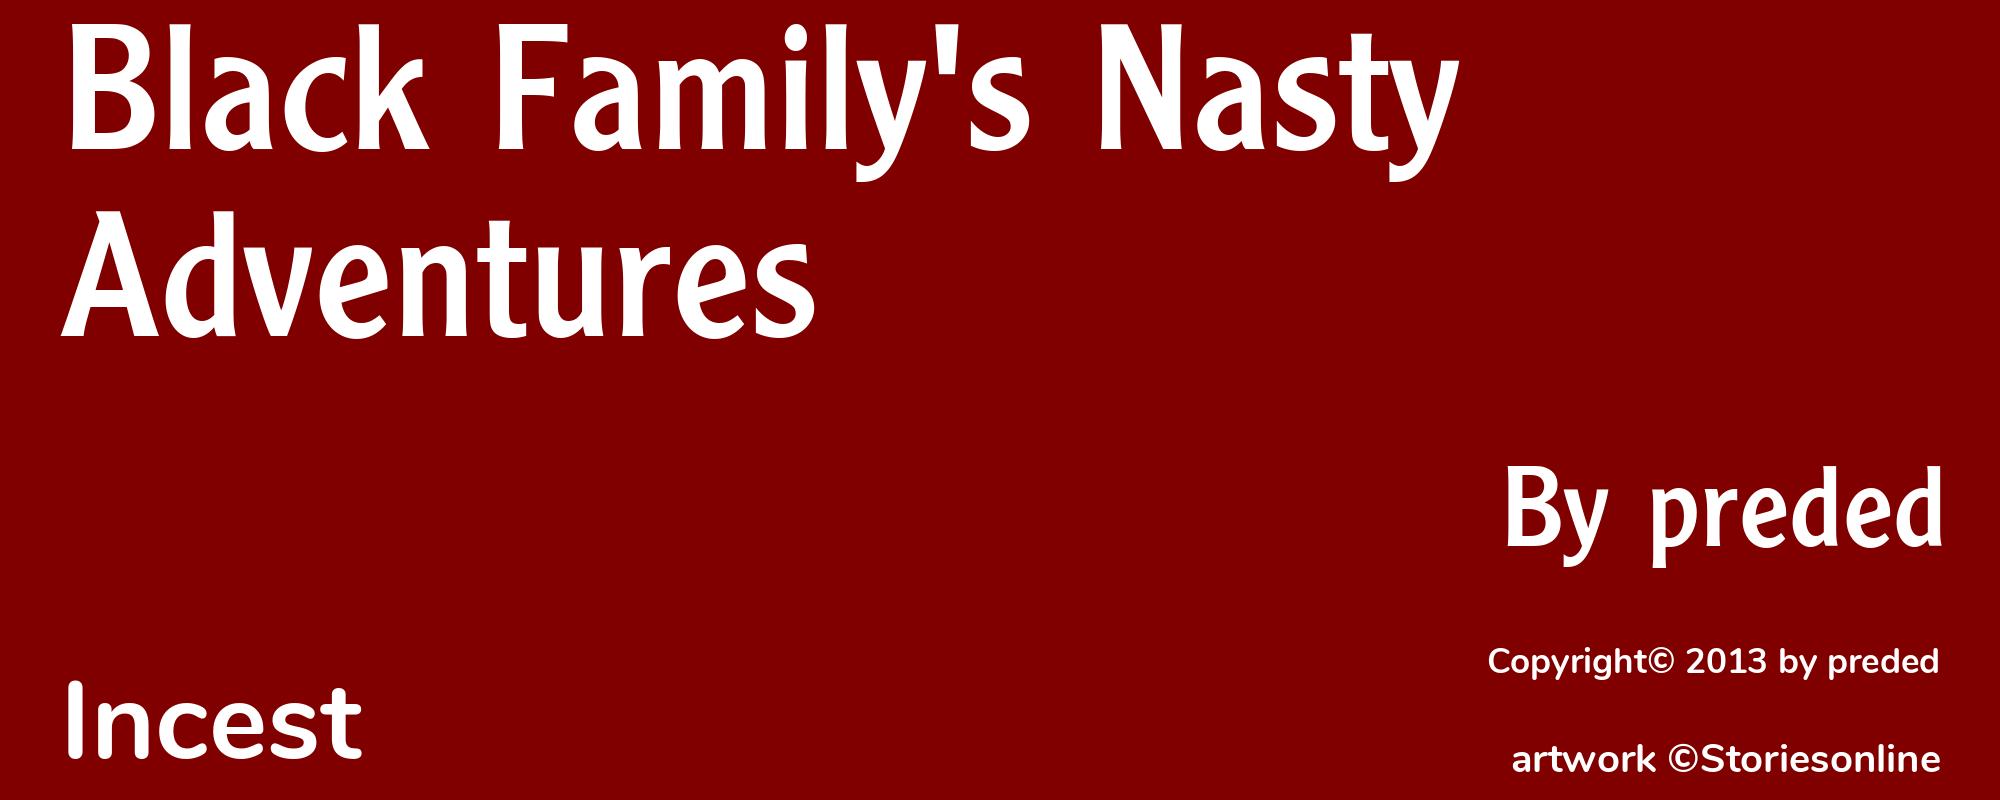 Black Family's Nasty Adventures - Cover